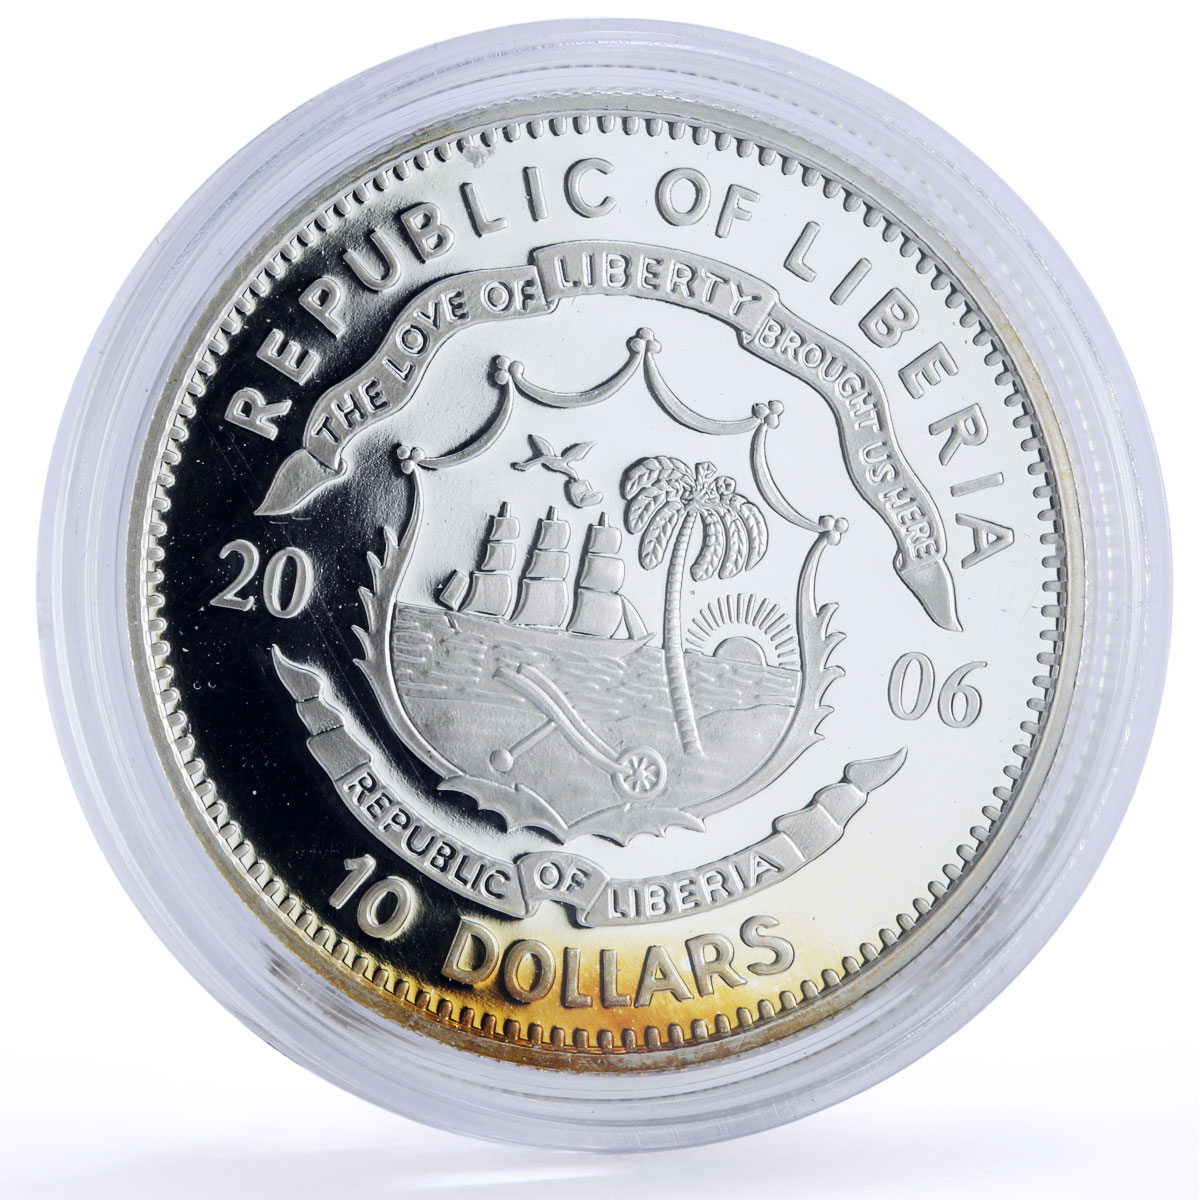 Liberia 10 dollars Explorer Roald Amundsen Antarctic Expedition silver coin 2006